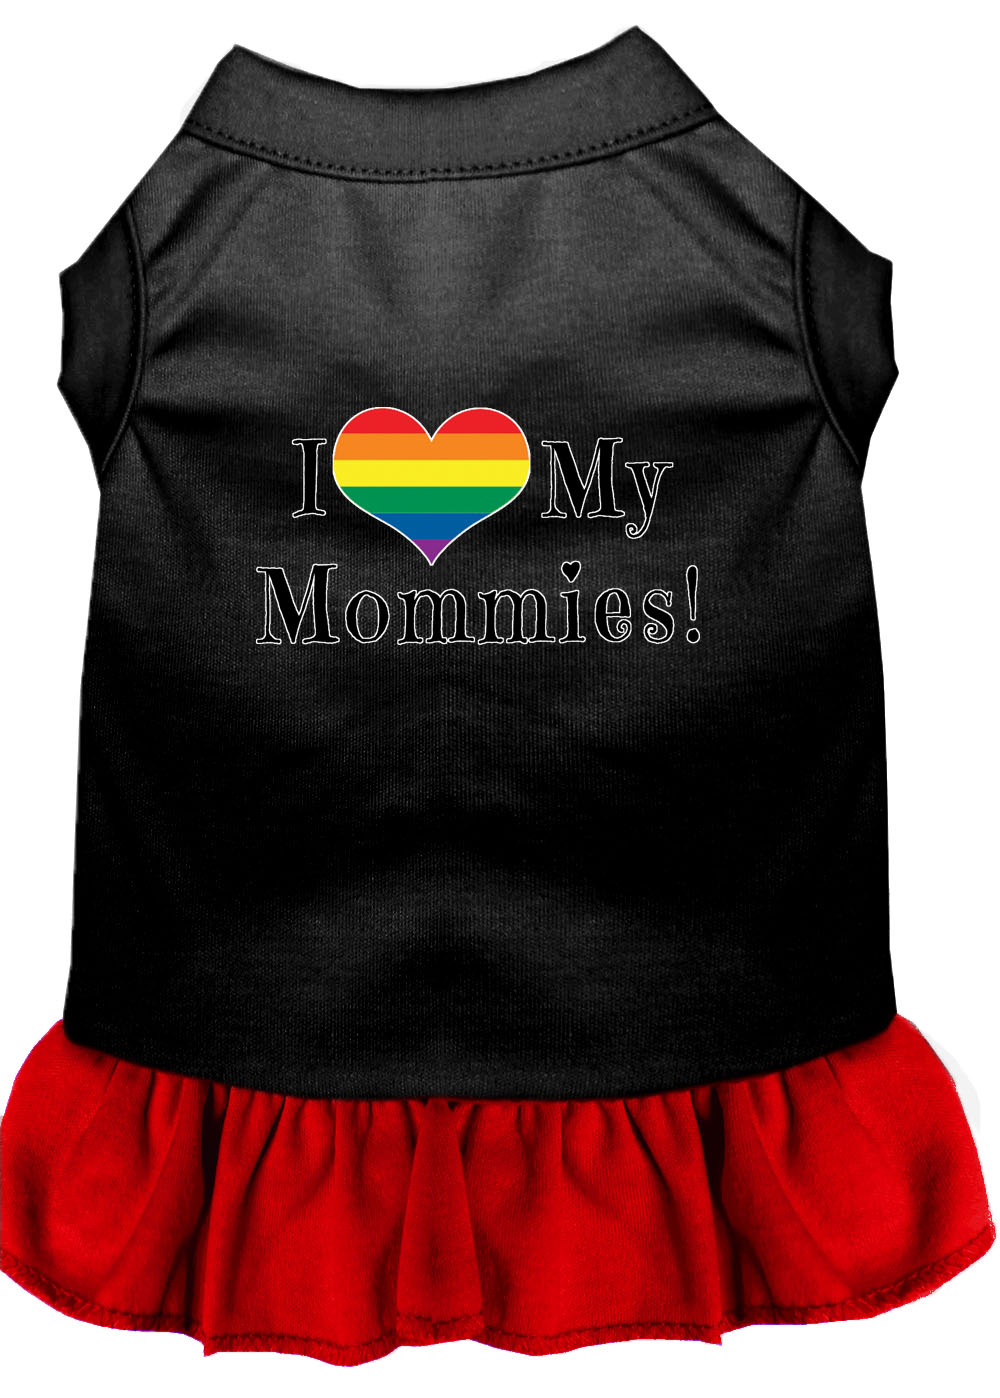 I Heart my Mommies Screen Print Dog Dress Black with Red XXXL